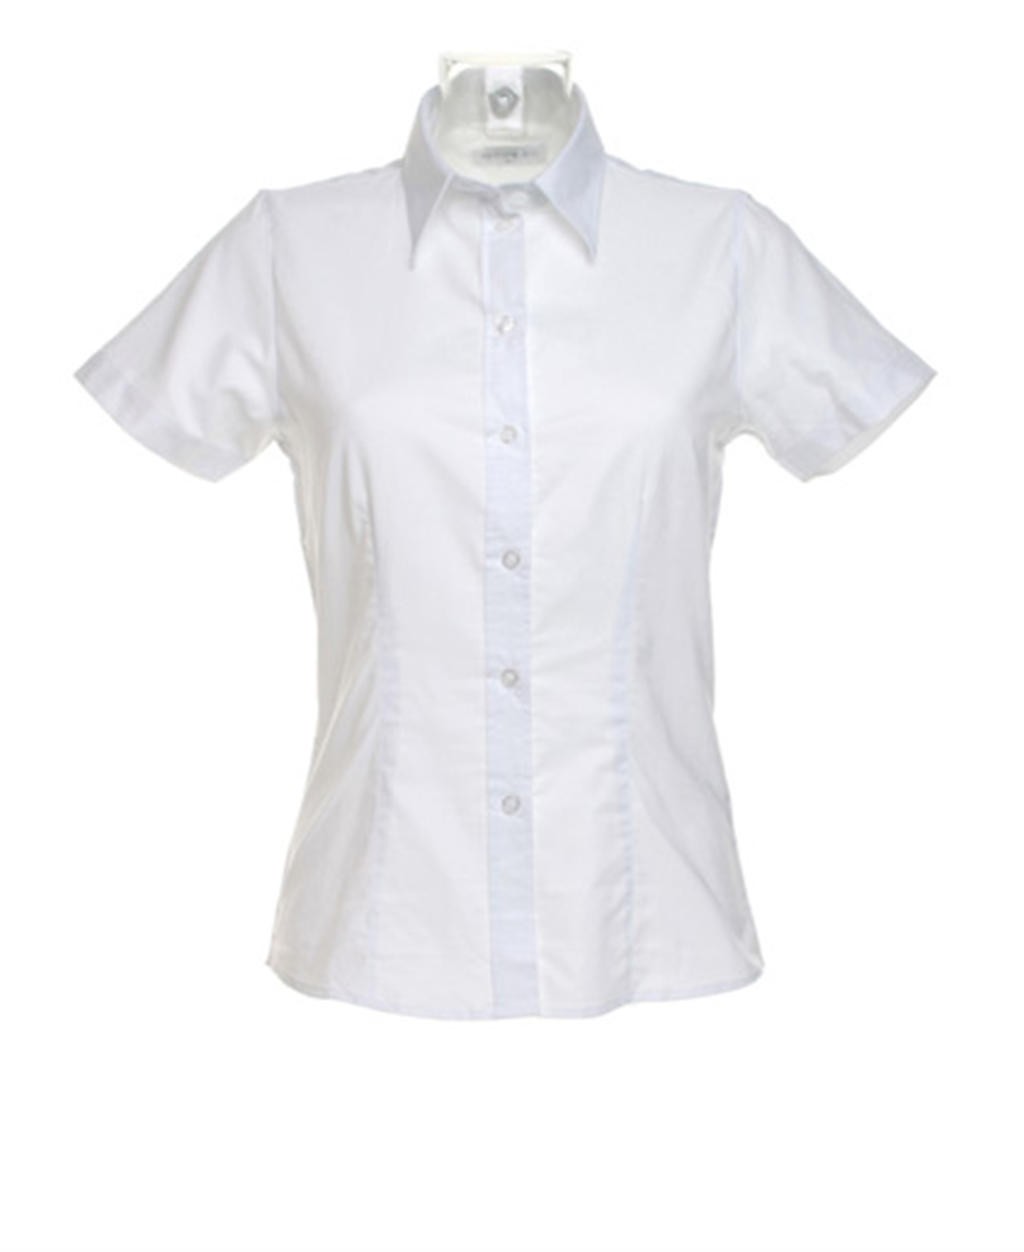 Kustom Kit Women's Tailored Fit Workwear Oxford Shirt SSL KK360